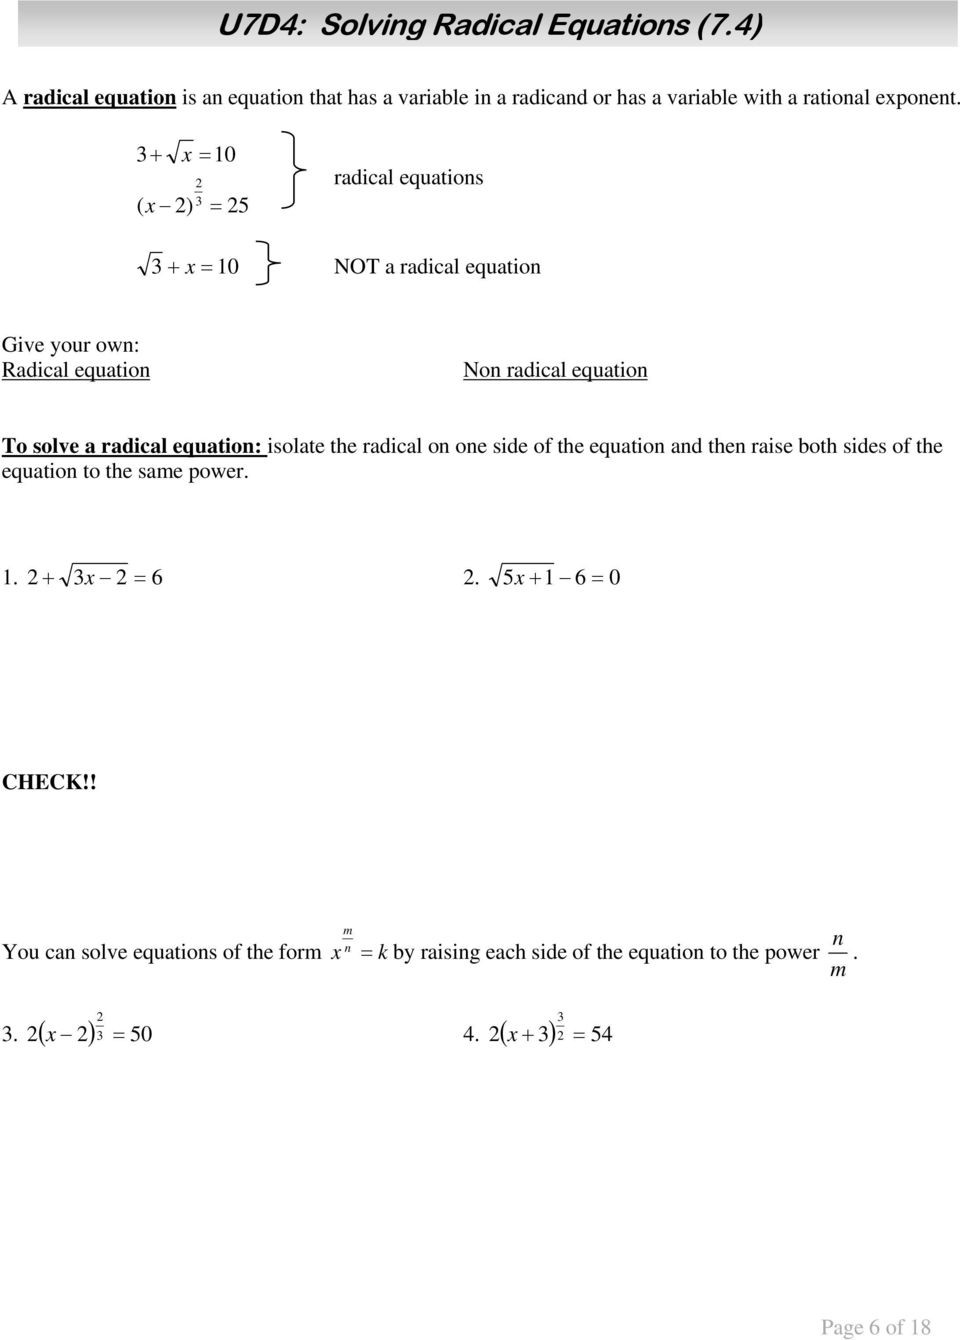 Radicals and Rational Exponents Worksheet Unit 7 Radical Functions &amp; Rational Exponents Pdf Free